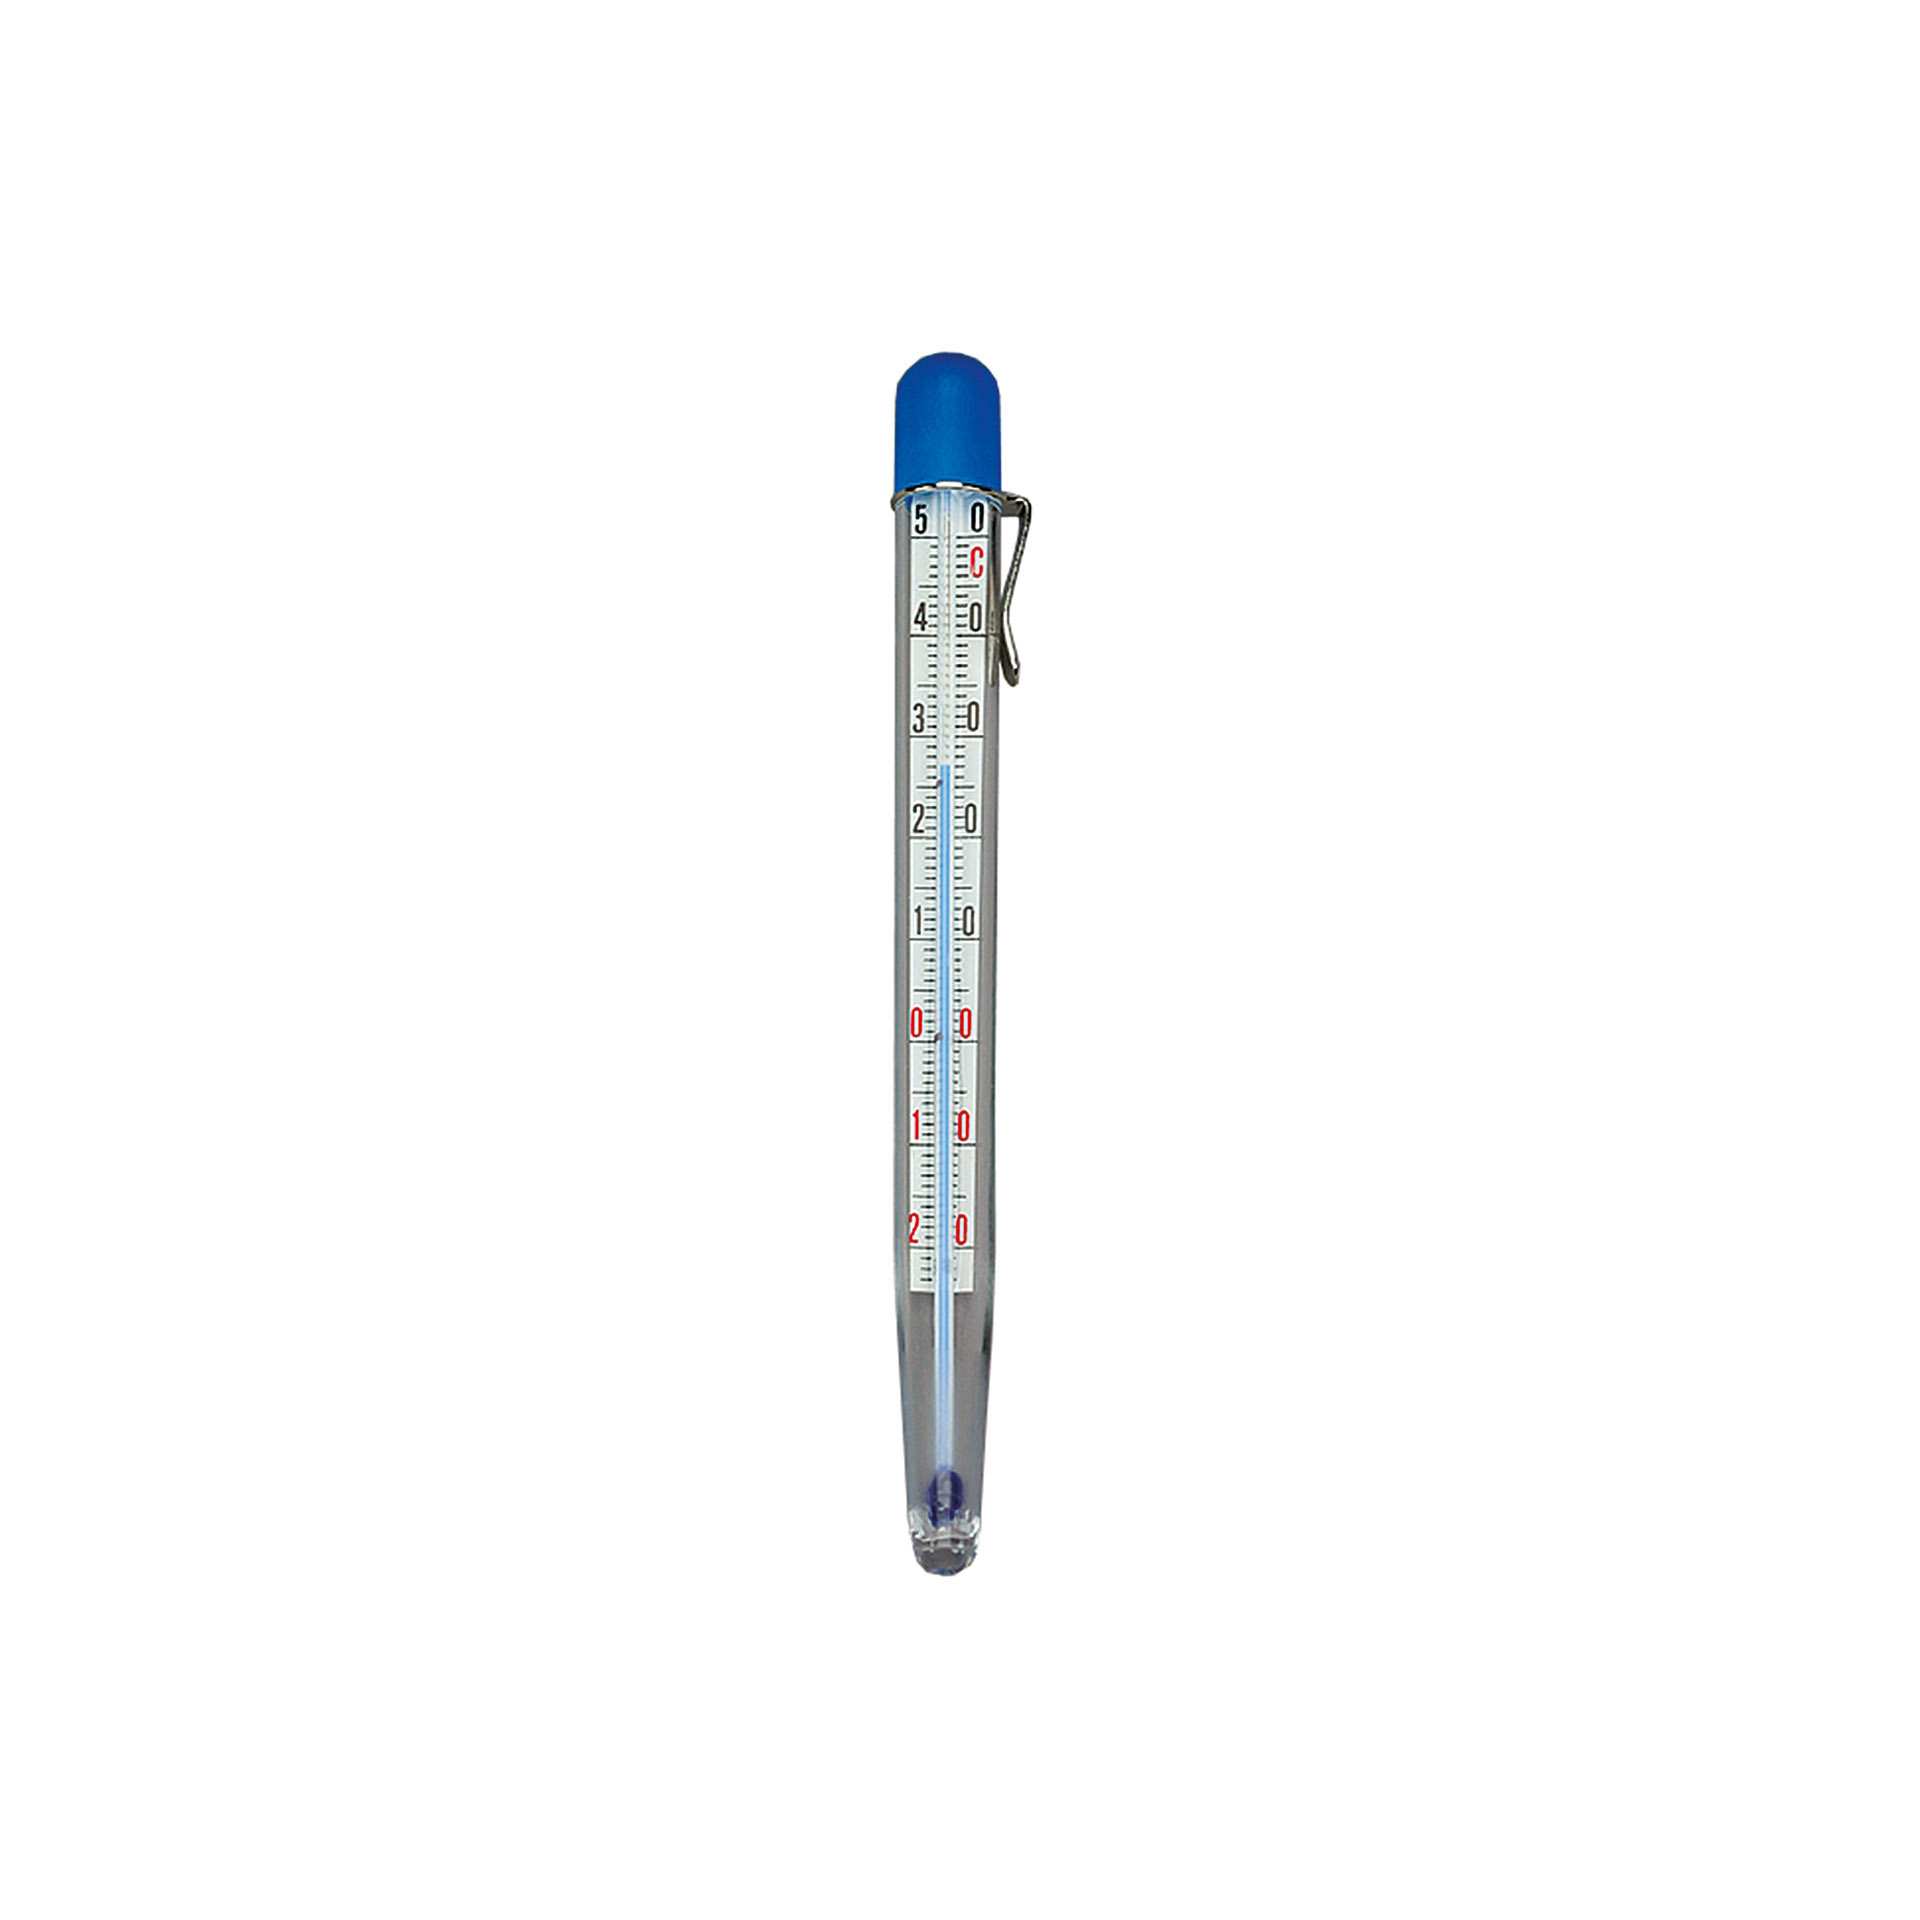 Thermometer - - 20 / + 50°C - Abm. 14,0 x 1,5 x 1,5 cm - Polystyrol - 160004-C